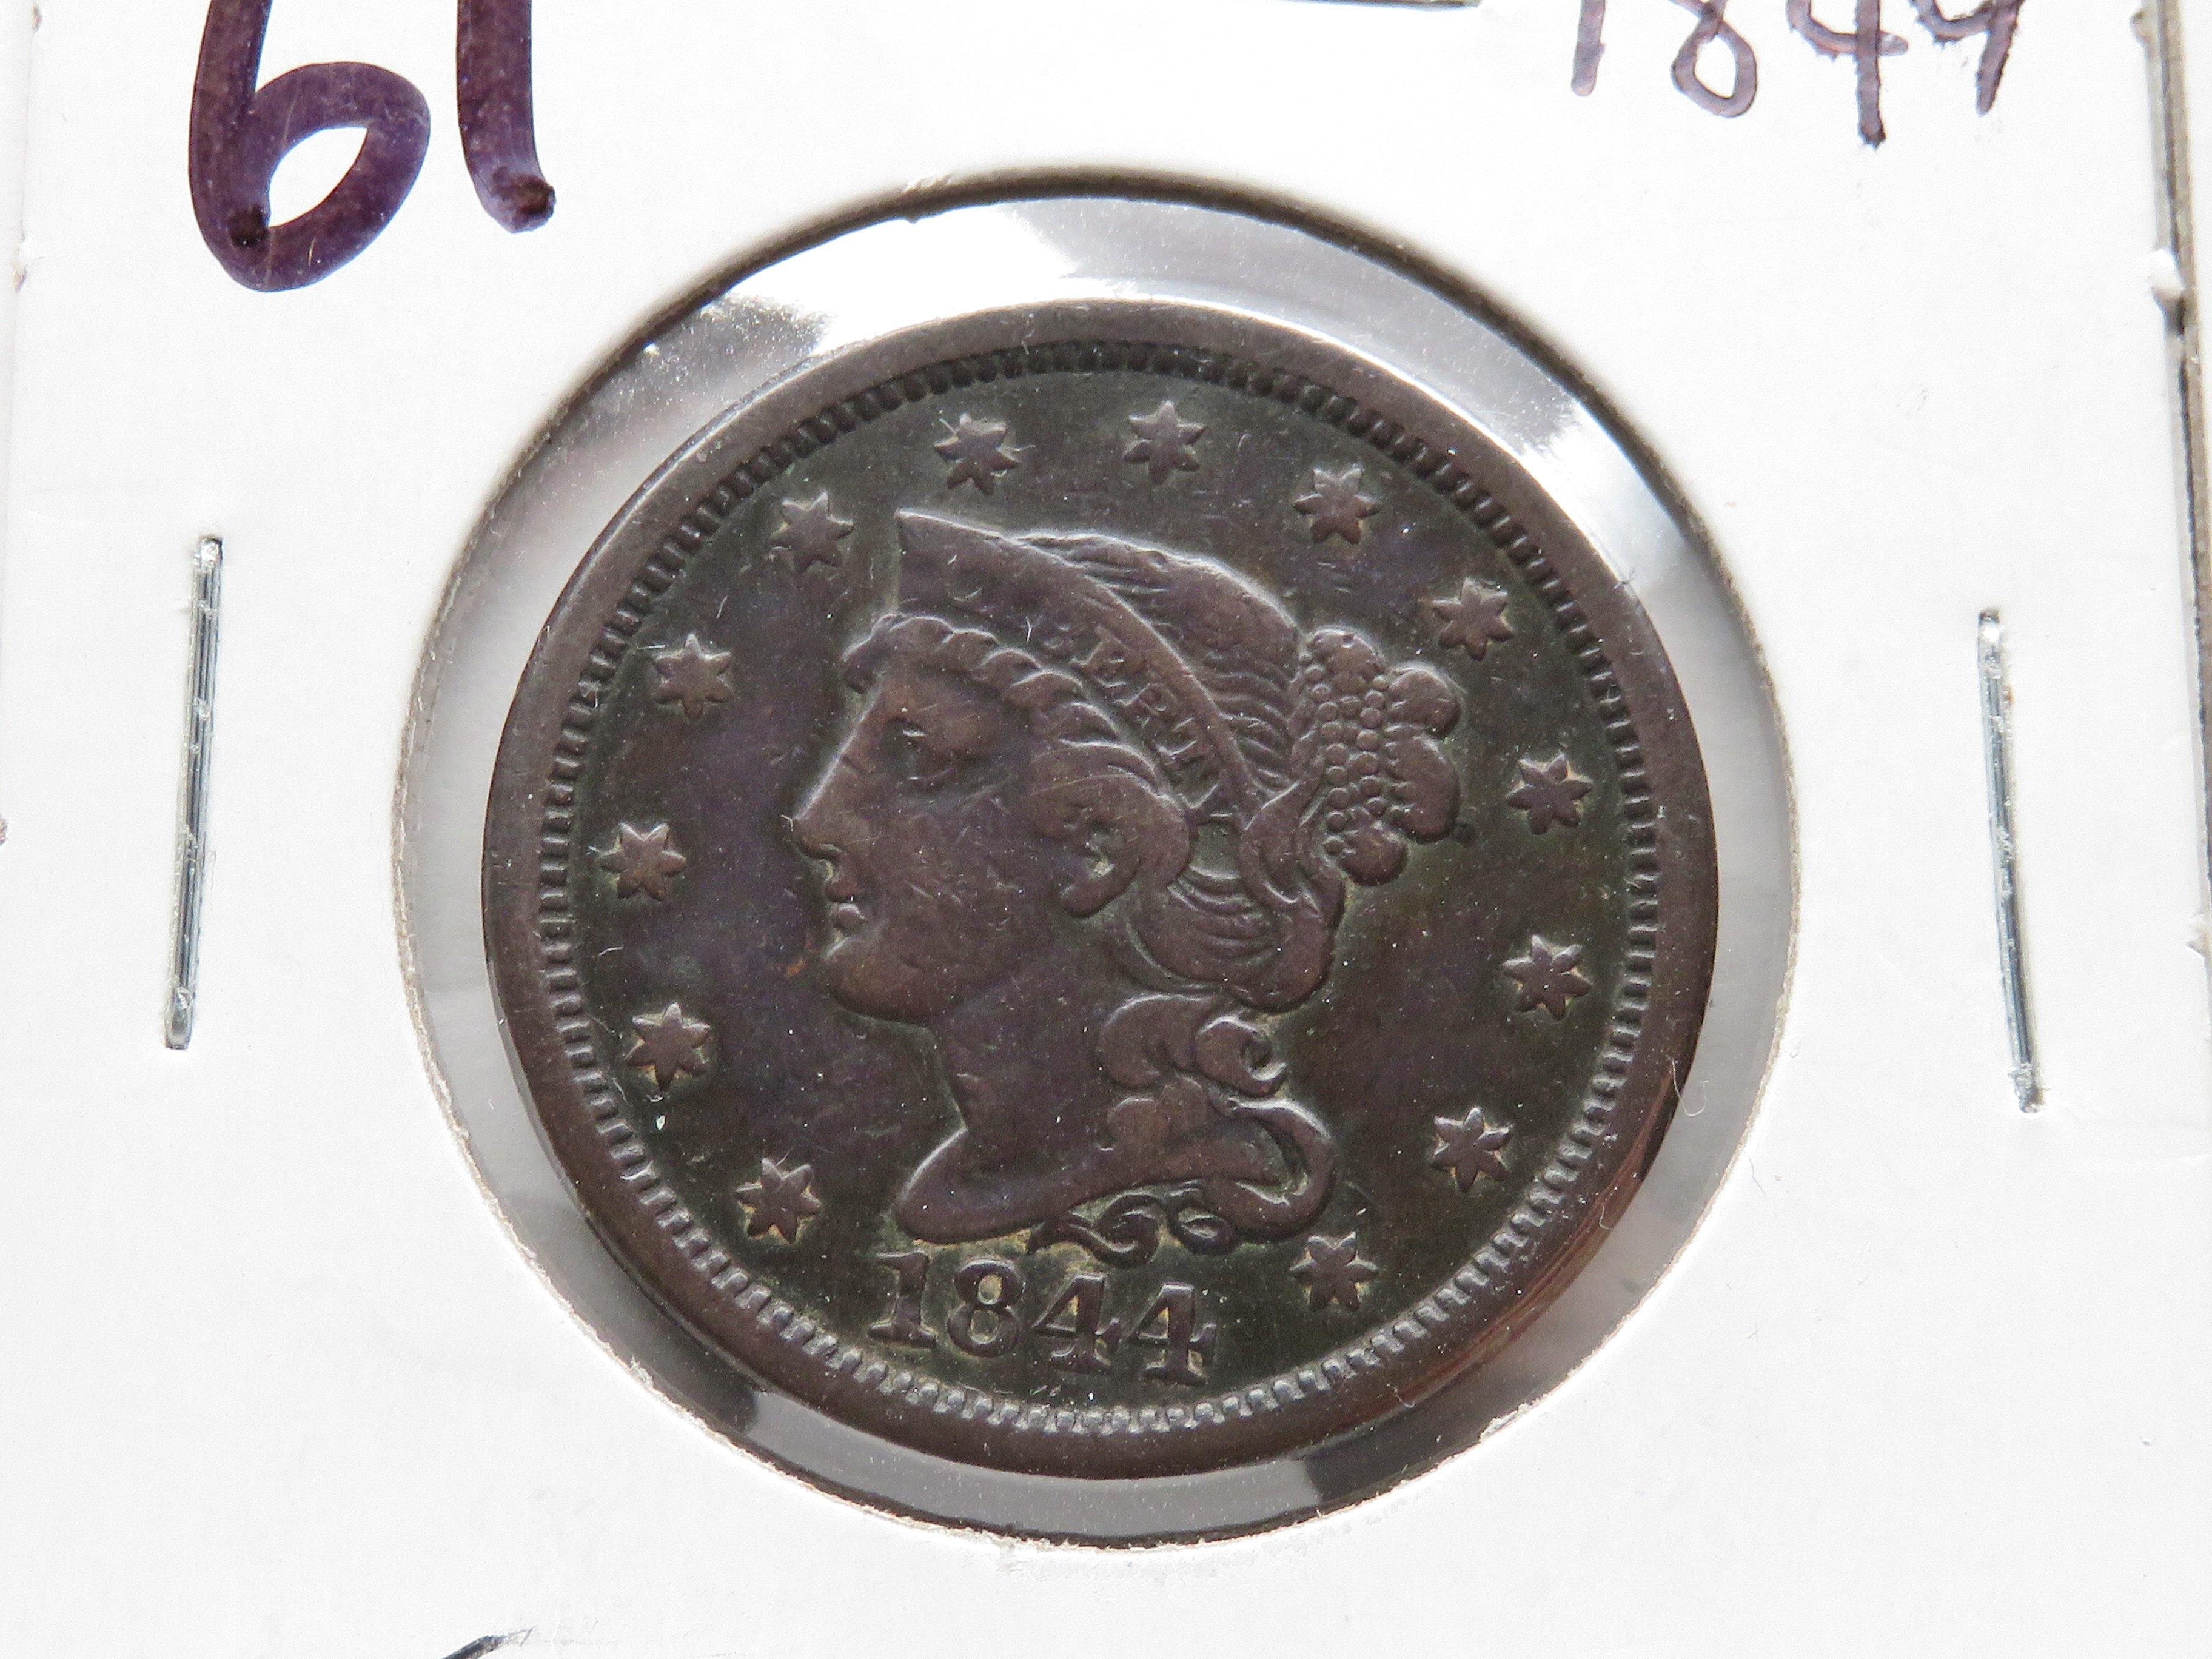 2 Braided Hair Large Cents: 1844 VF, 1845 VG